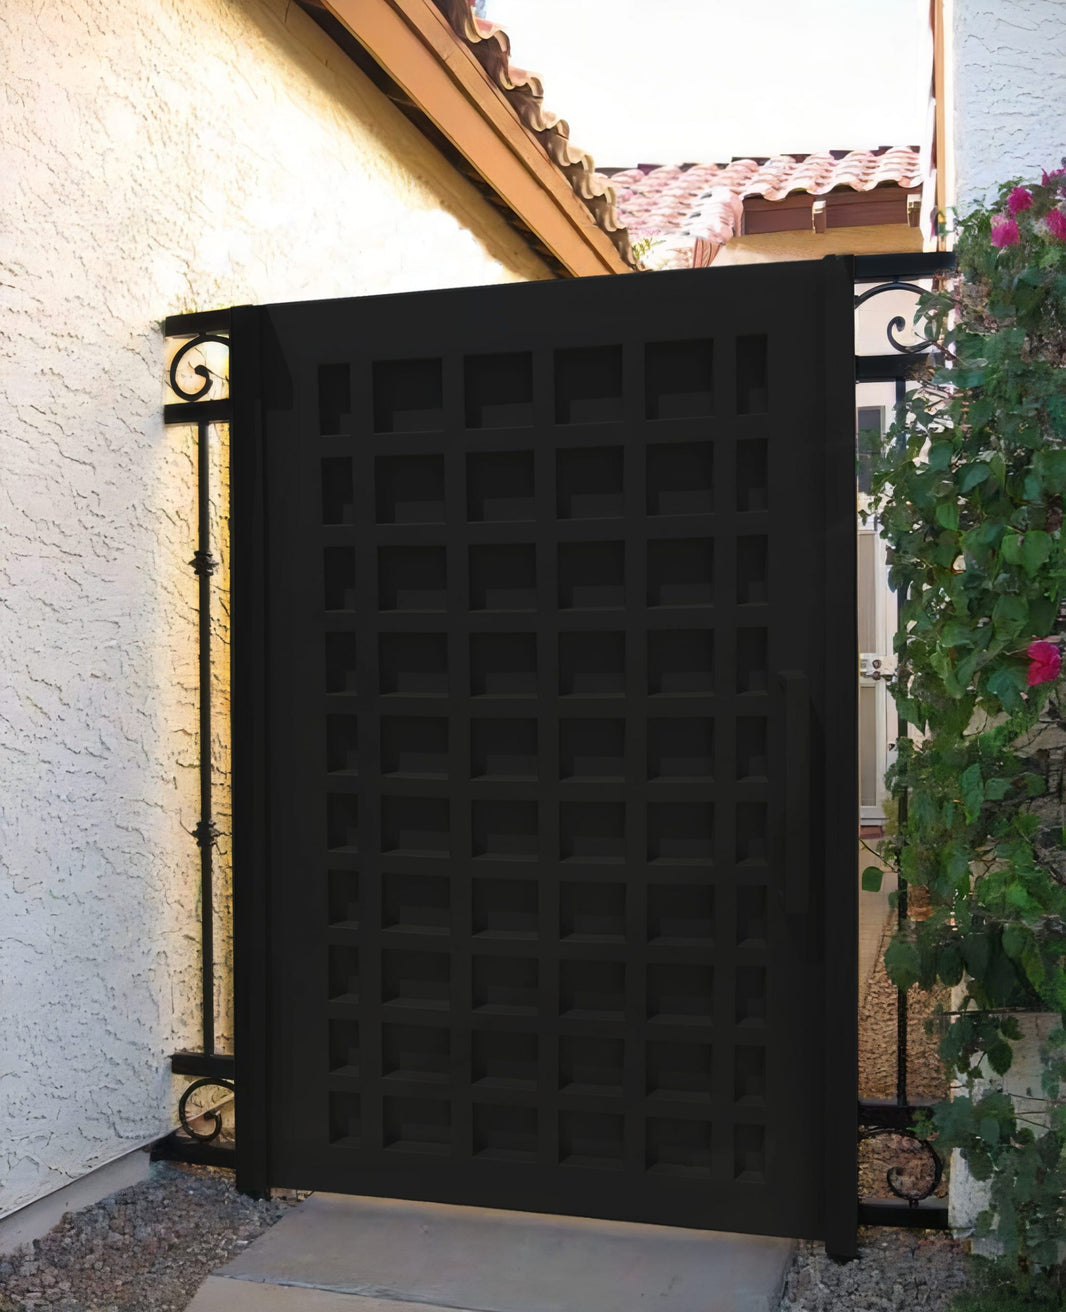 Simplistic Square Box Design Metal Garden Gate |Modern Fabrication Wrought Iron Pool Gate | Made in Canada – Model # 346